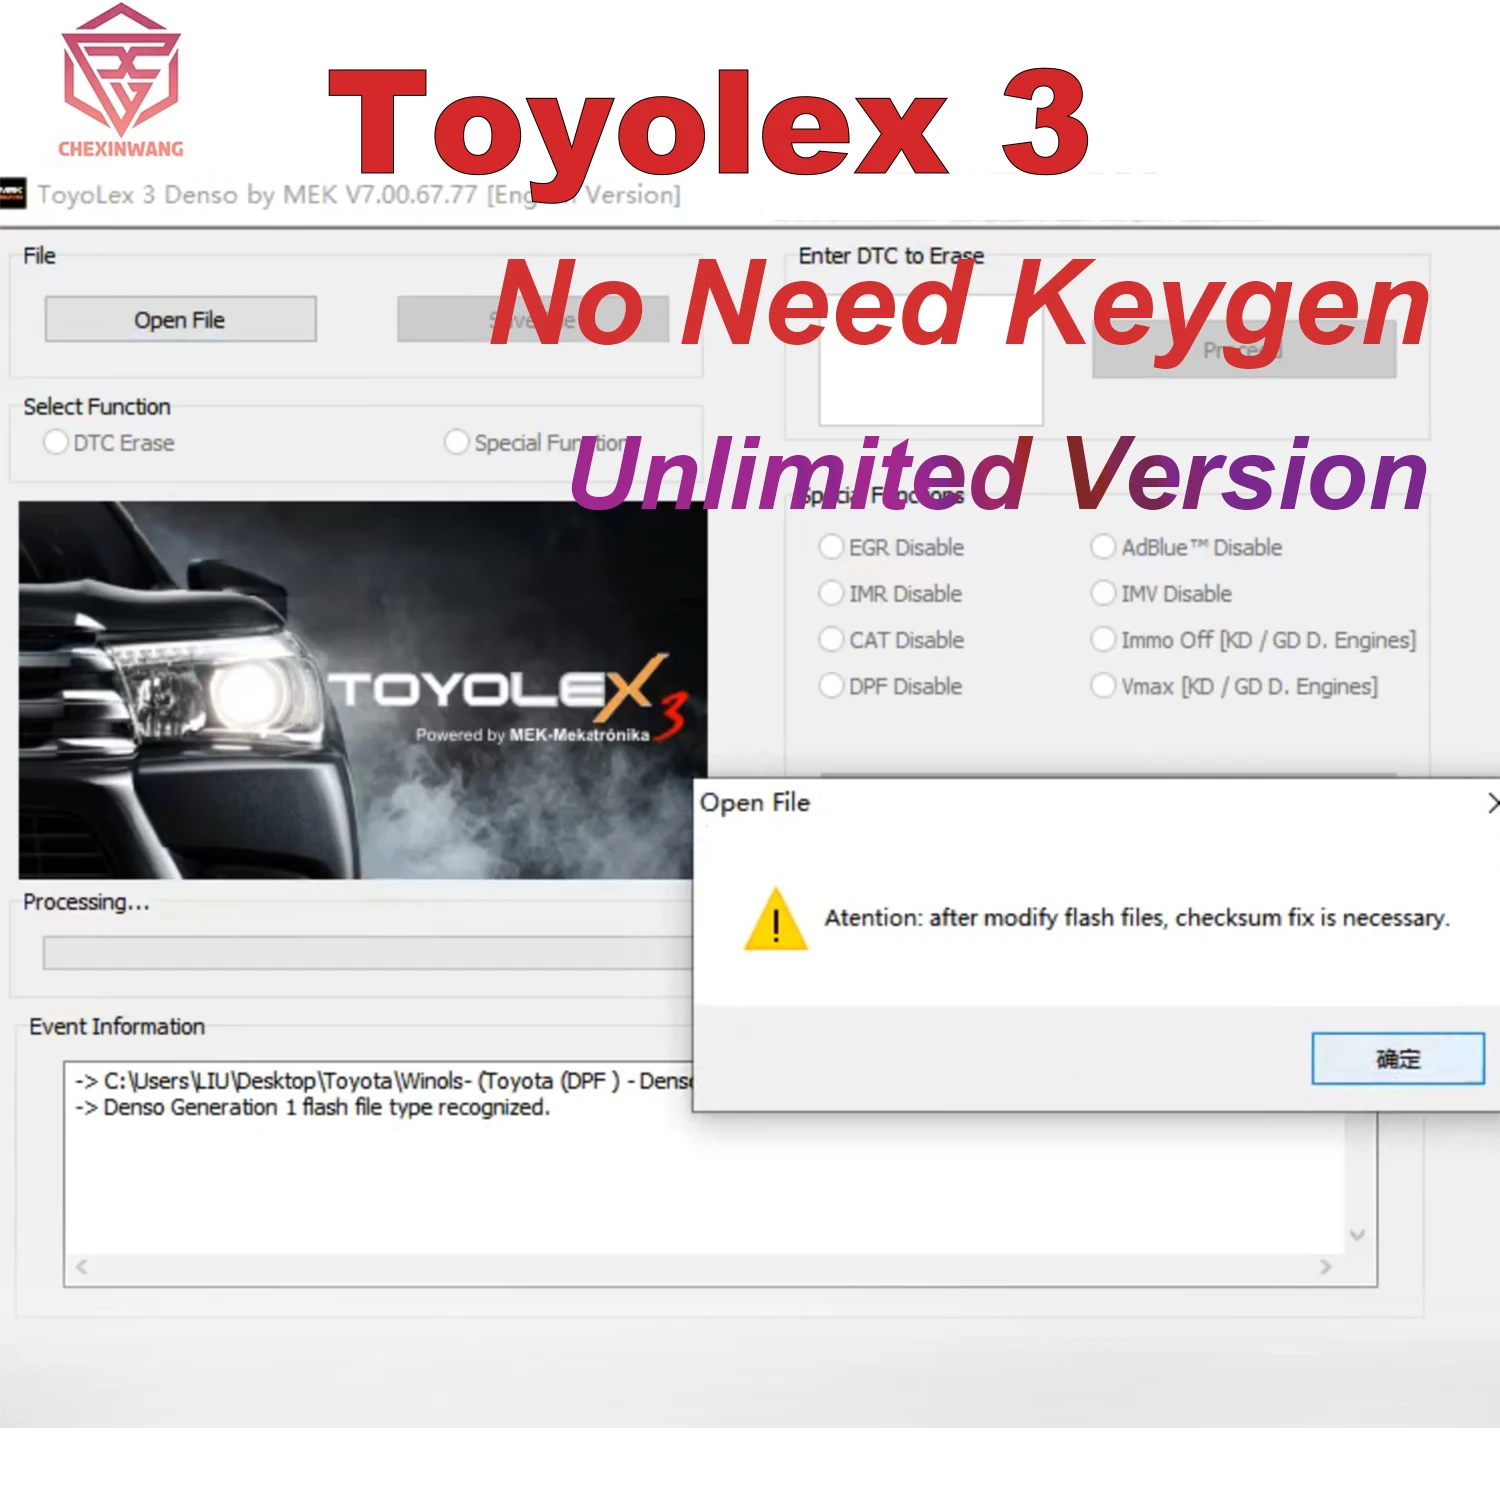 Toyolex3 Toyolex 3 Unlimited Version for Denso  heento DTC EGR IMR DPF IMV VMAX  - $102.84